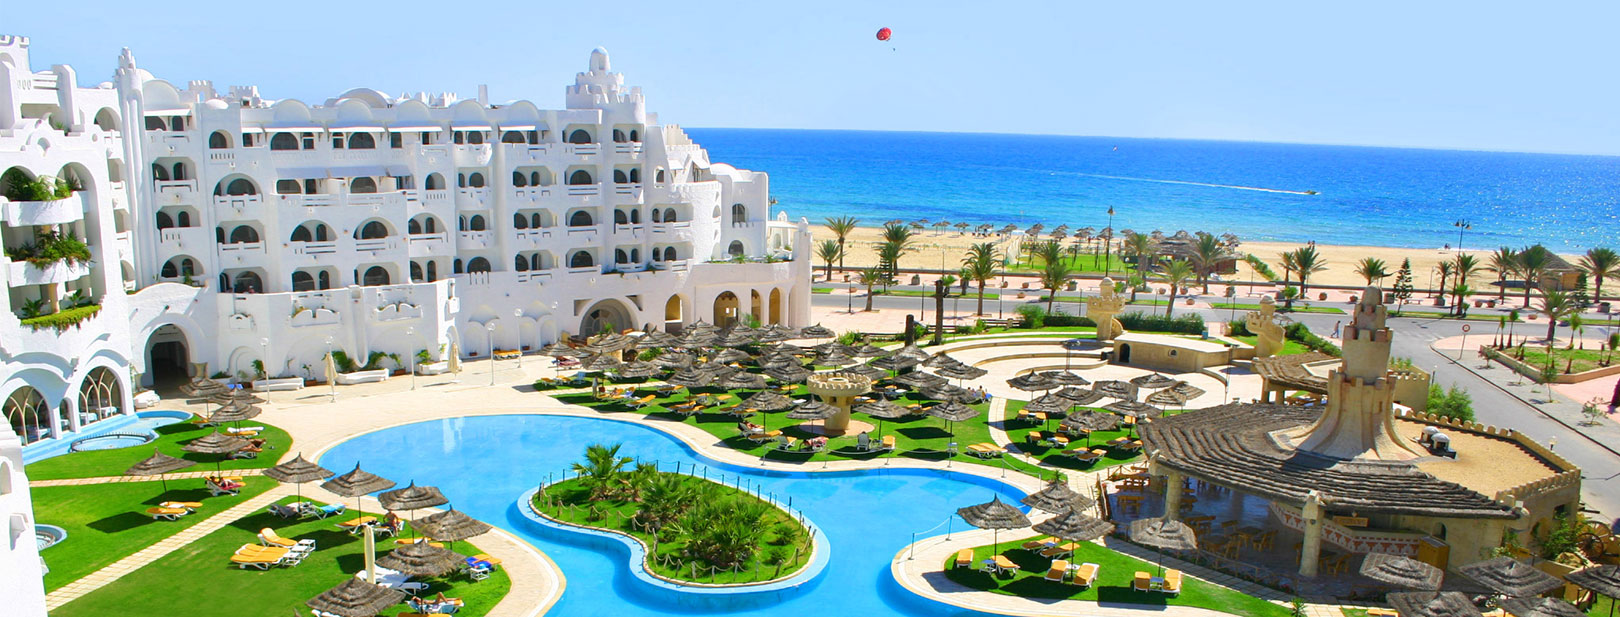 Tunisie - Hammamet - Hôtel Lella Baya 4* - Bagage inclus